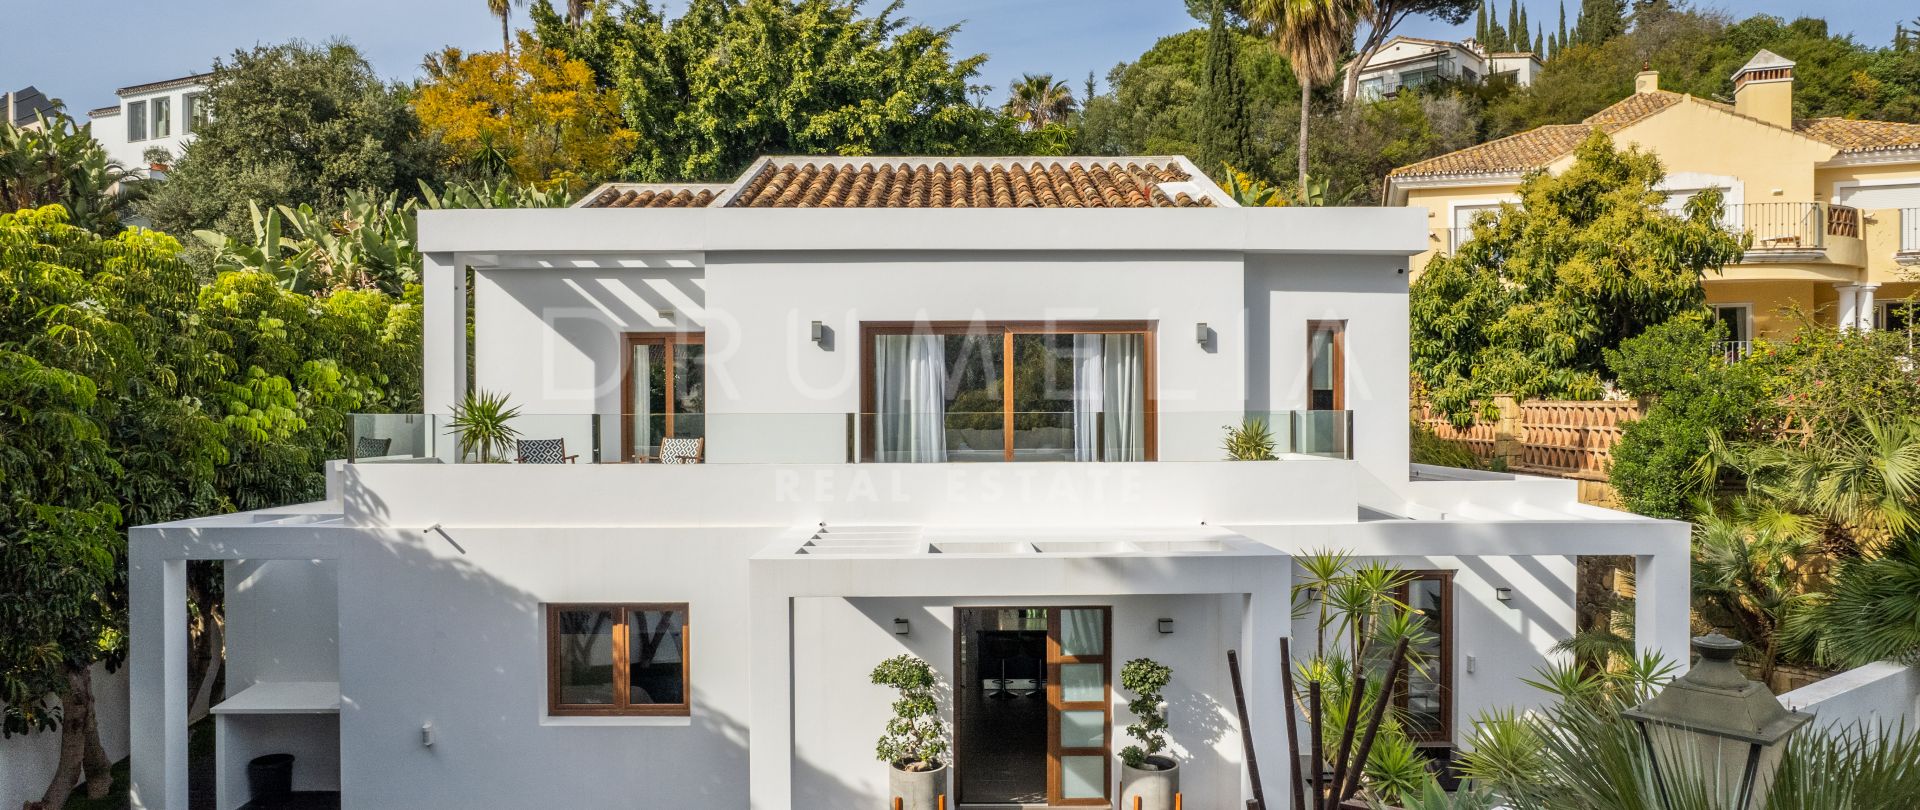 Familien-Villa in der exklusiven Urbanisation El Rosario, Marbella Ost